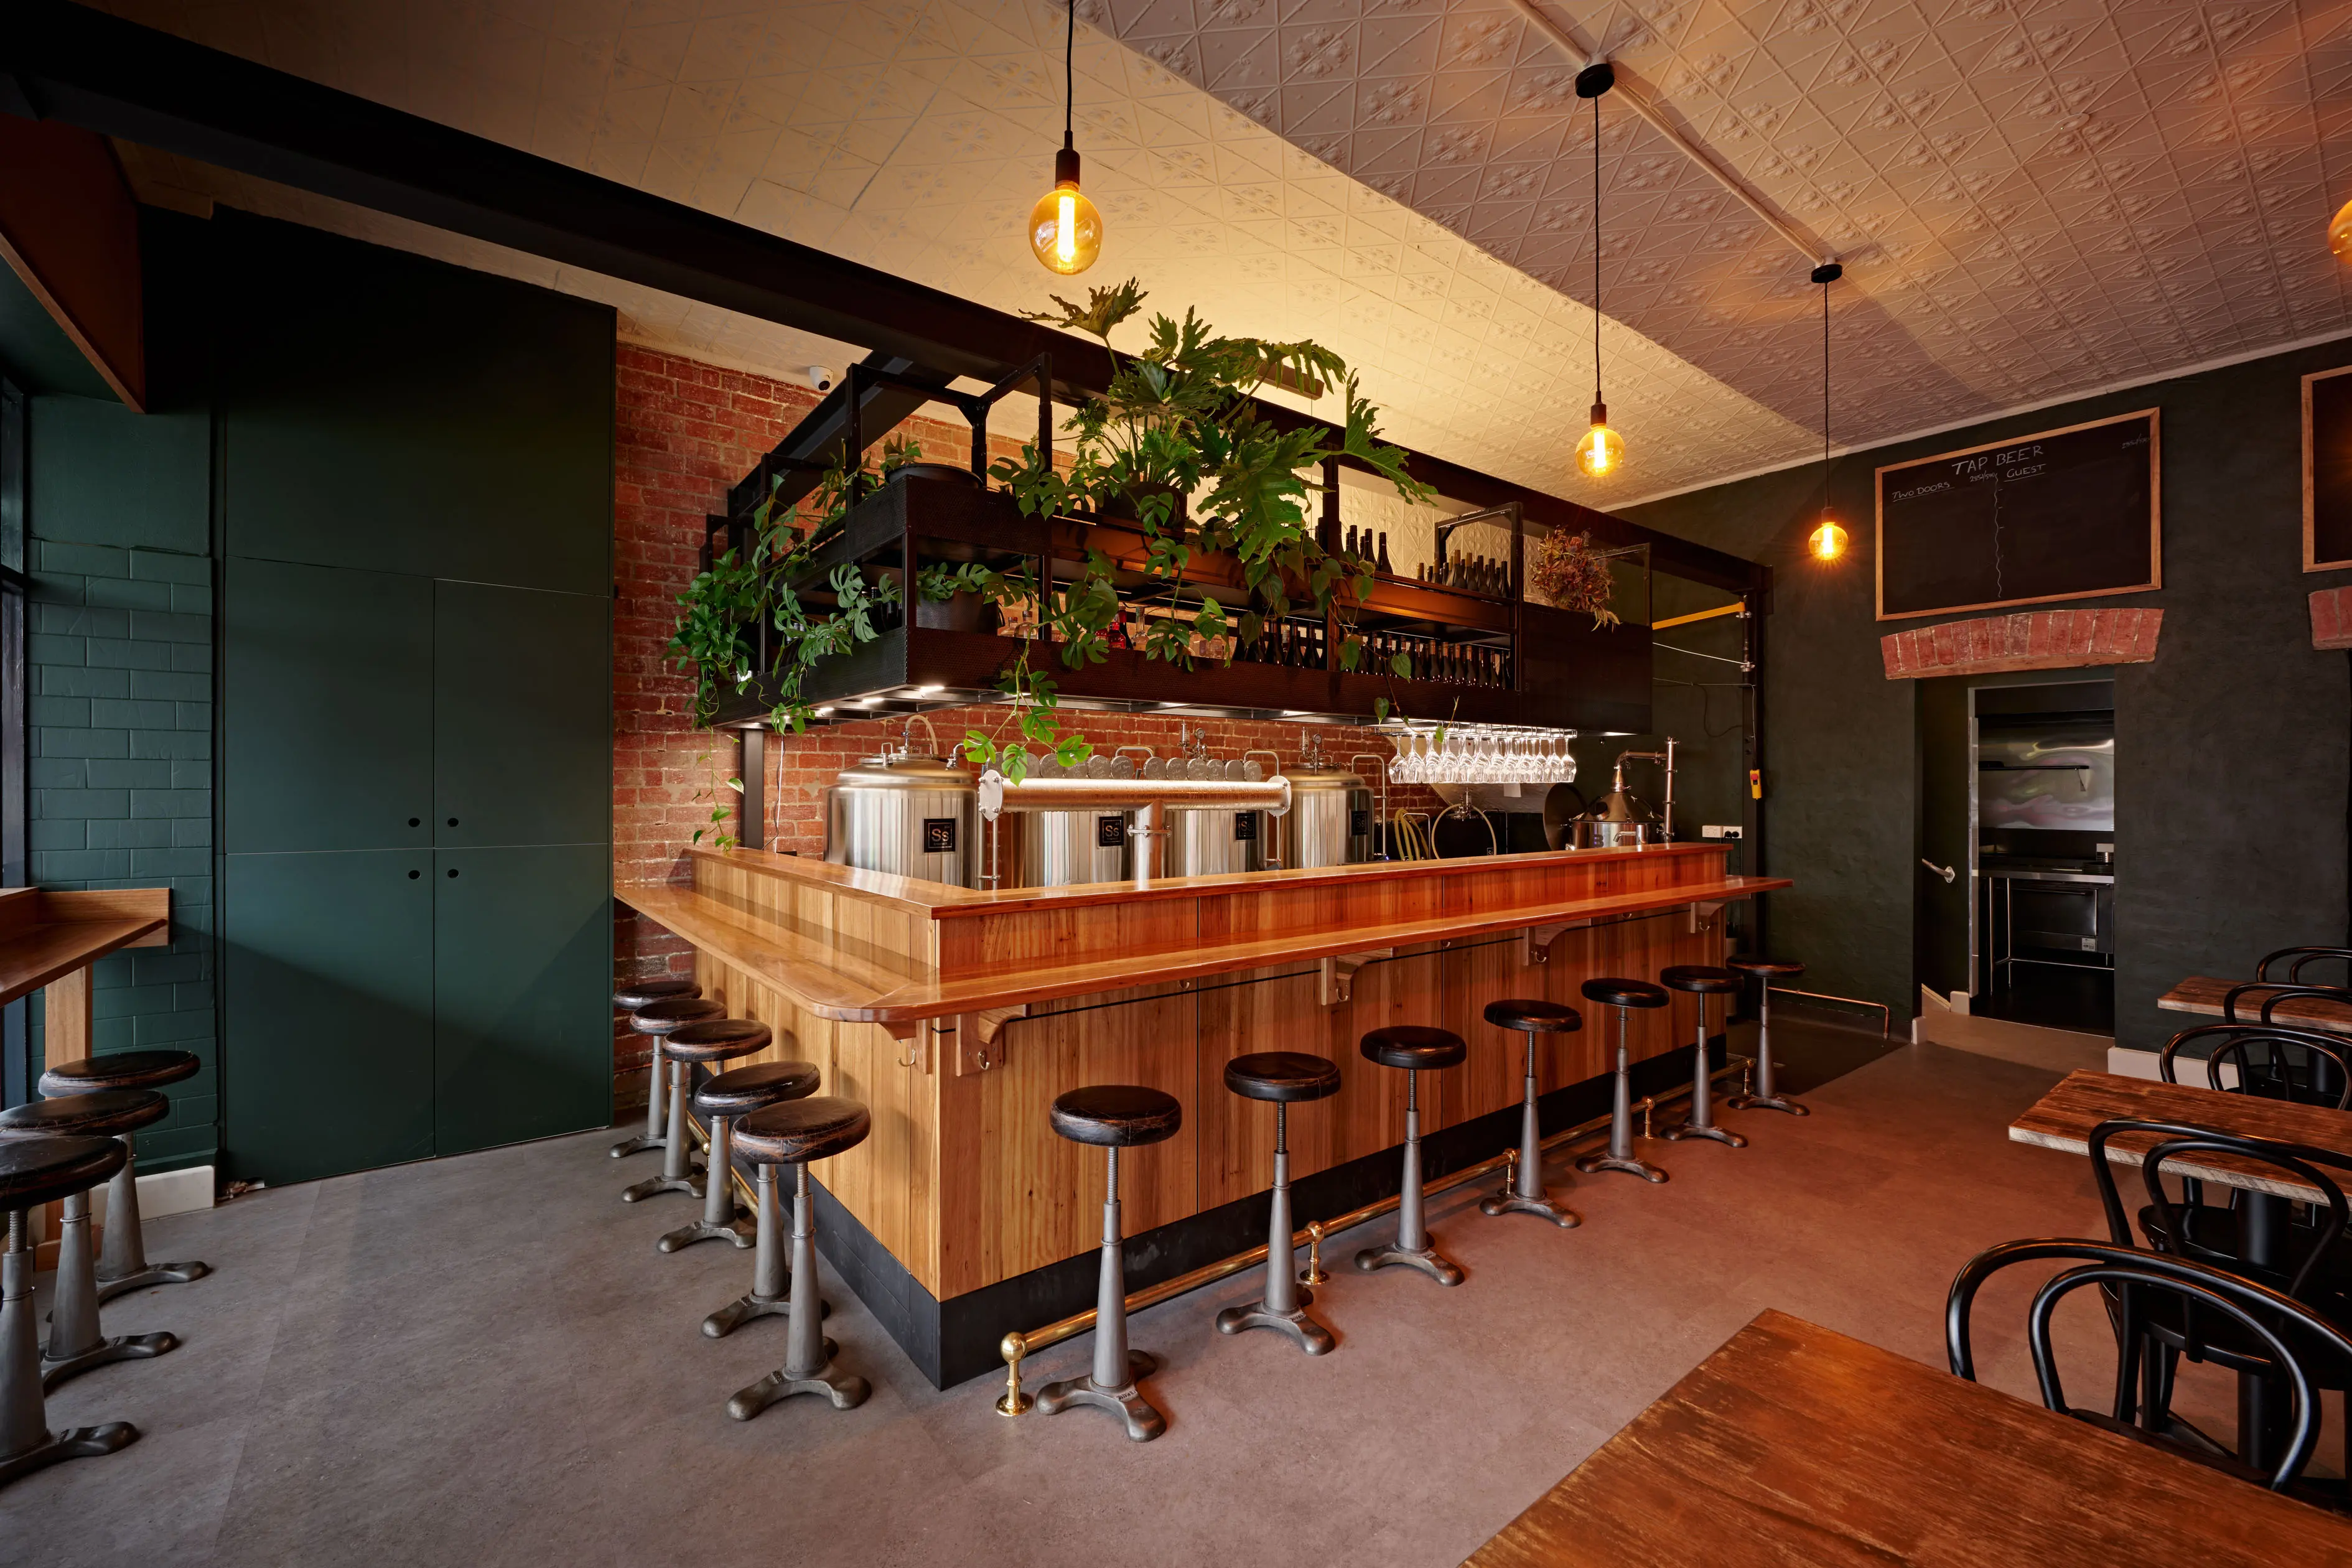 Two Doors Brewing - hospitality interior design - Ashburton, Melbourne, Australia